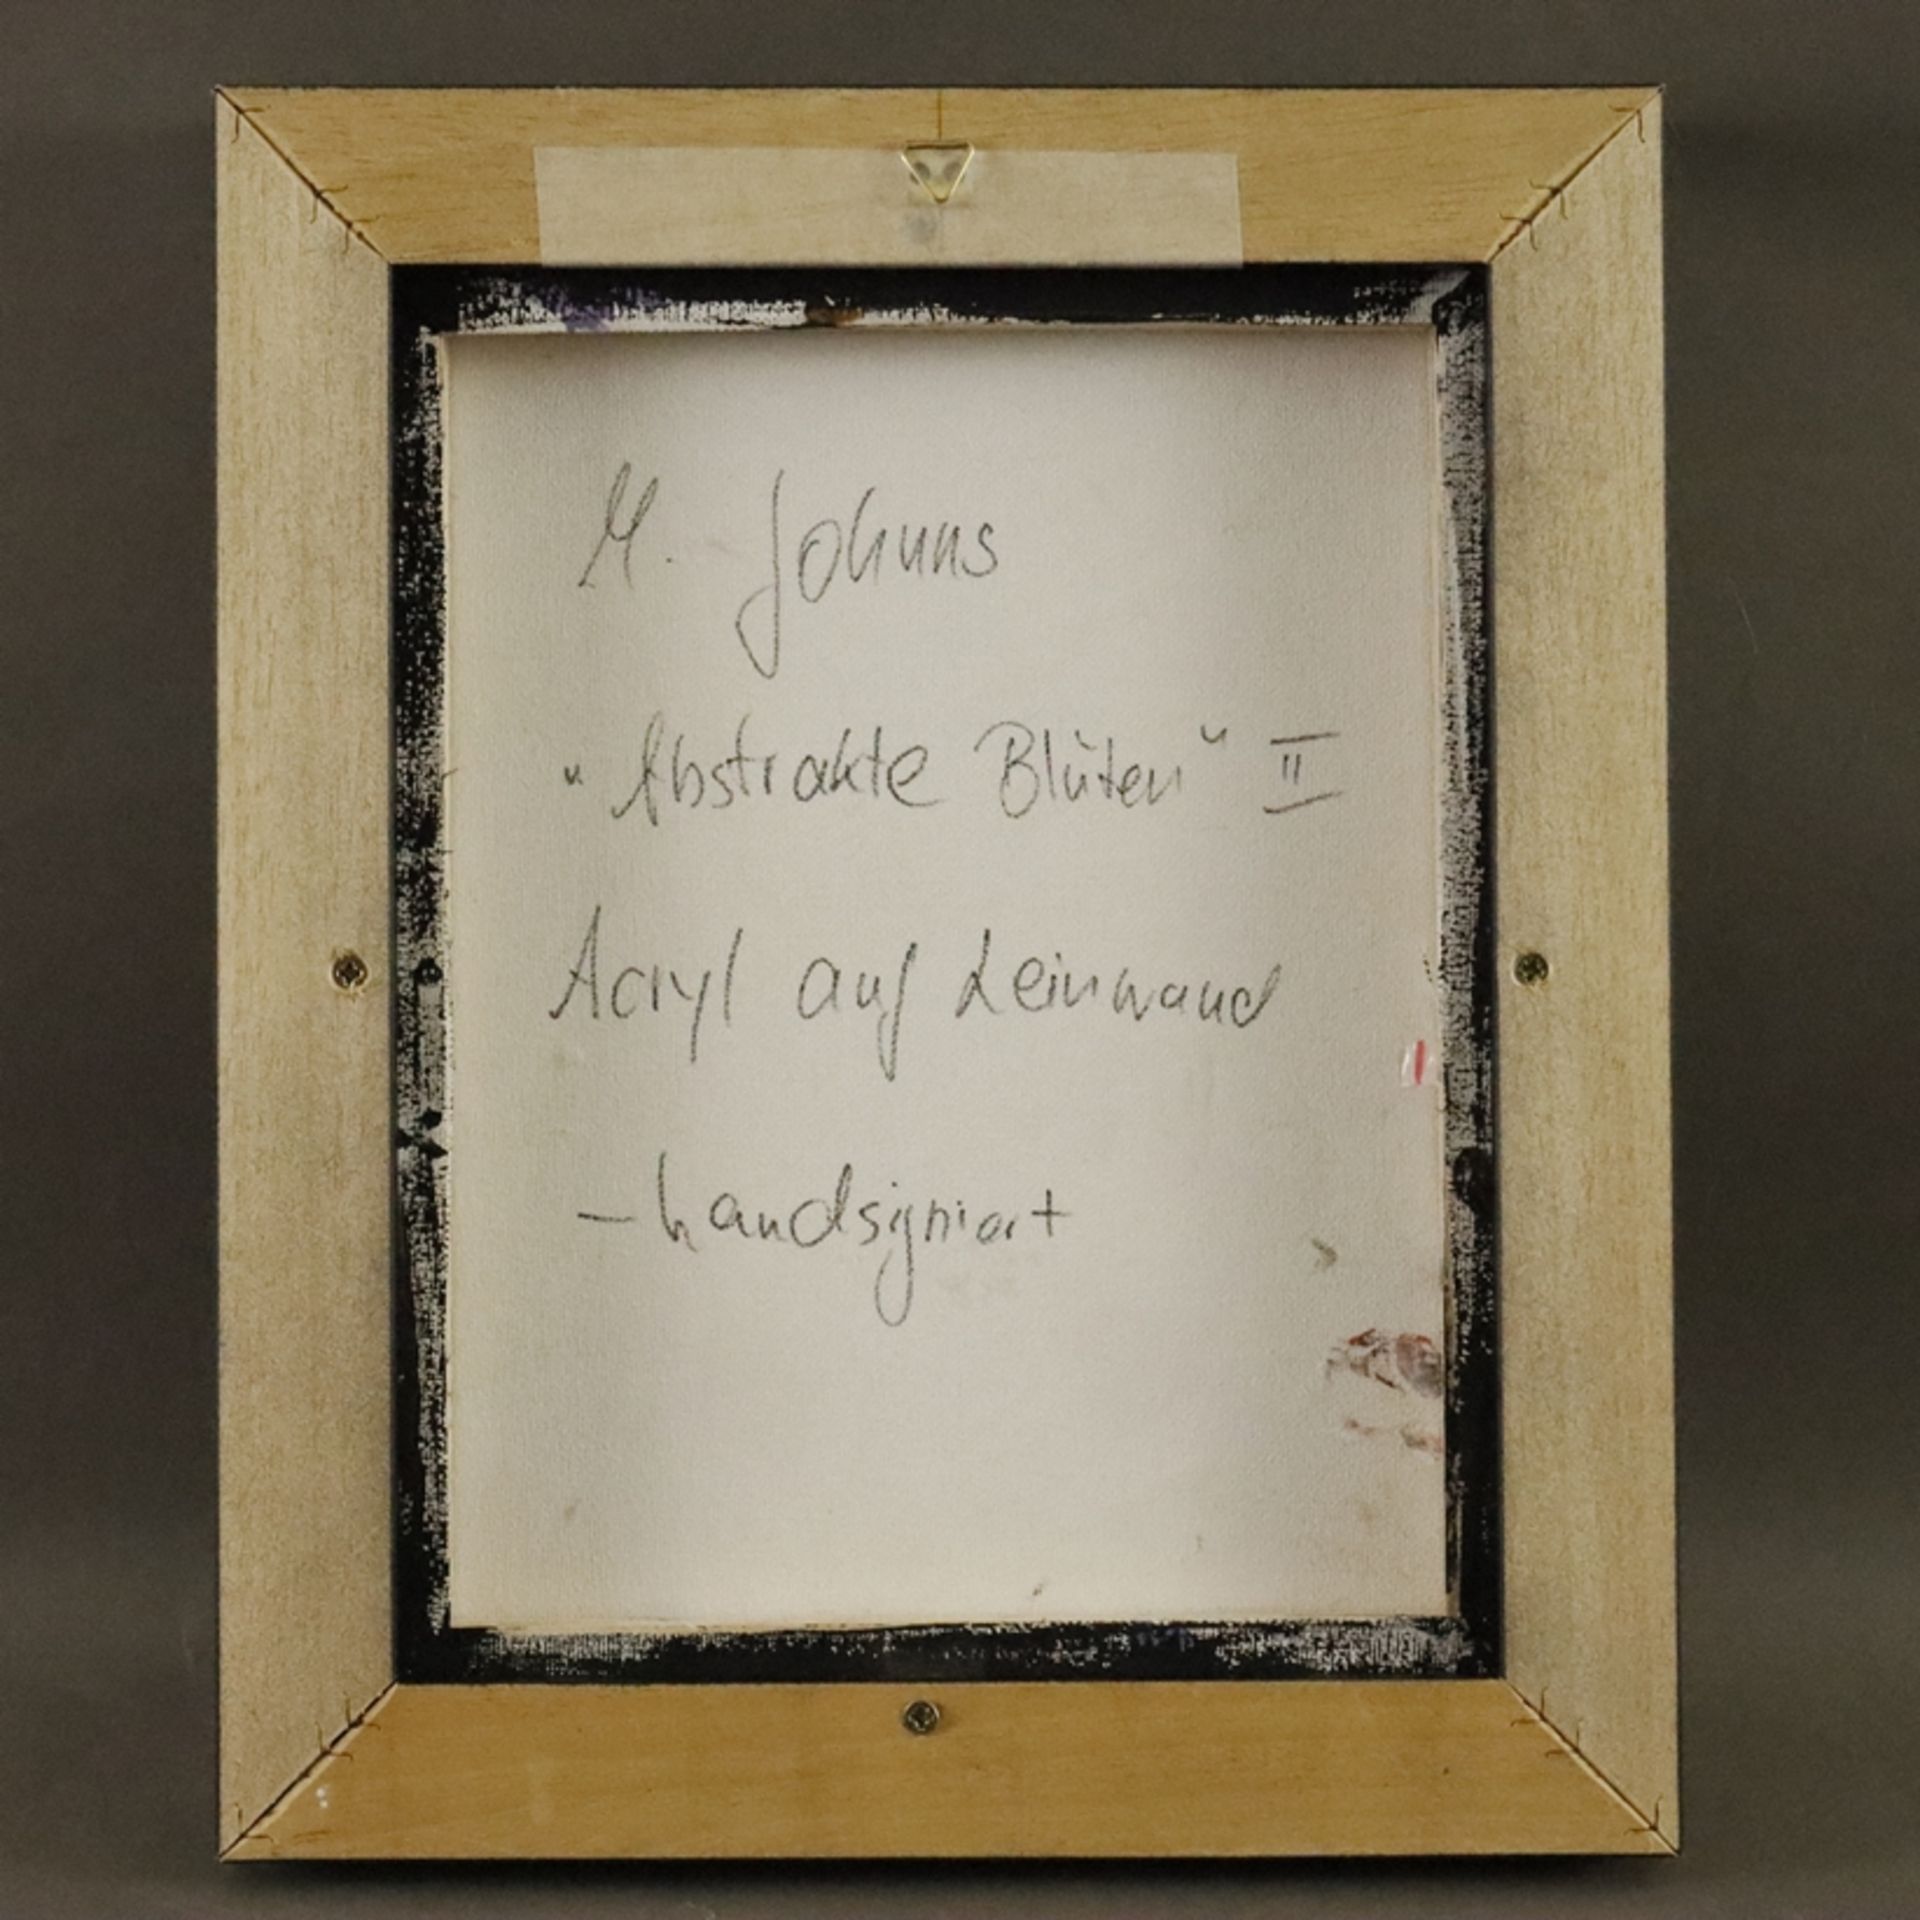 Johnns, M. - "Abstrakte Blüten II", Acryl auf Leinwand, unten rechts handsigniert "M. Johnns", ca. - Image 5 of 5